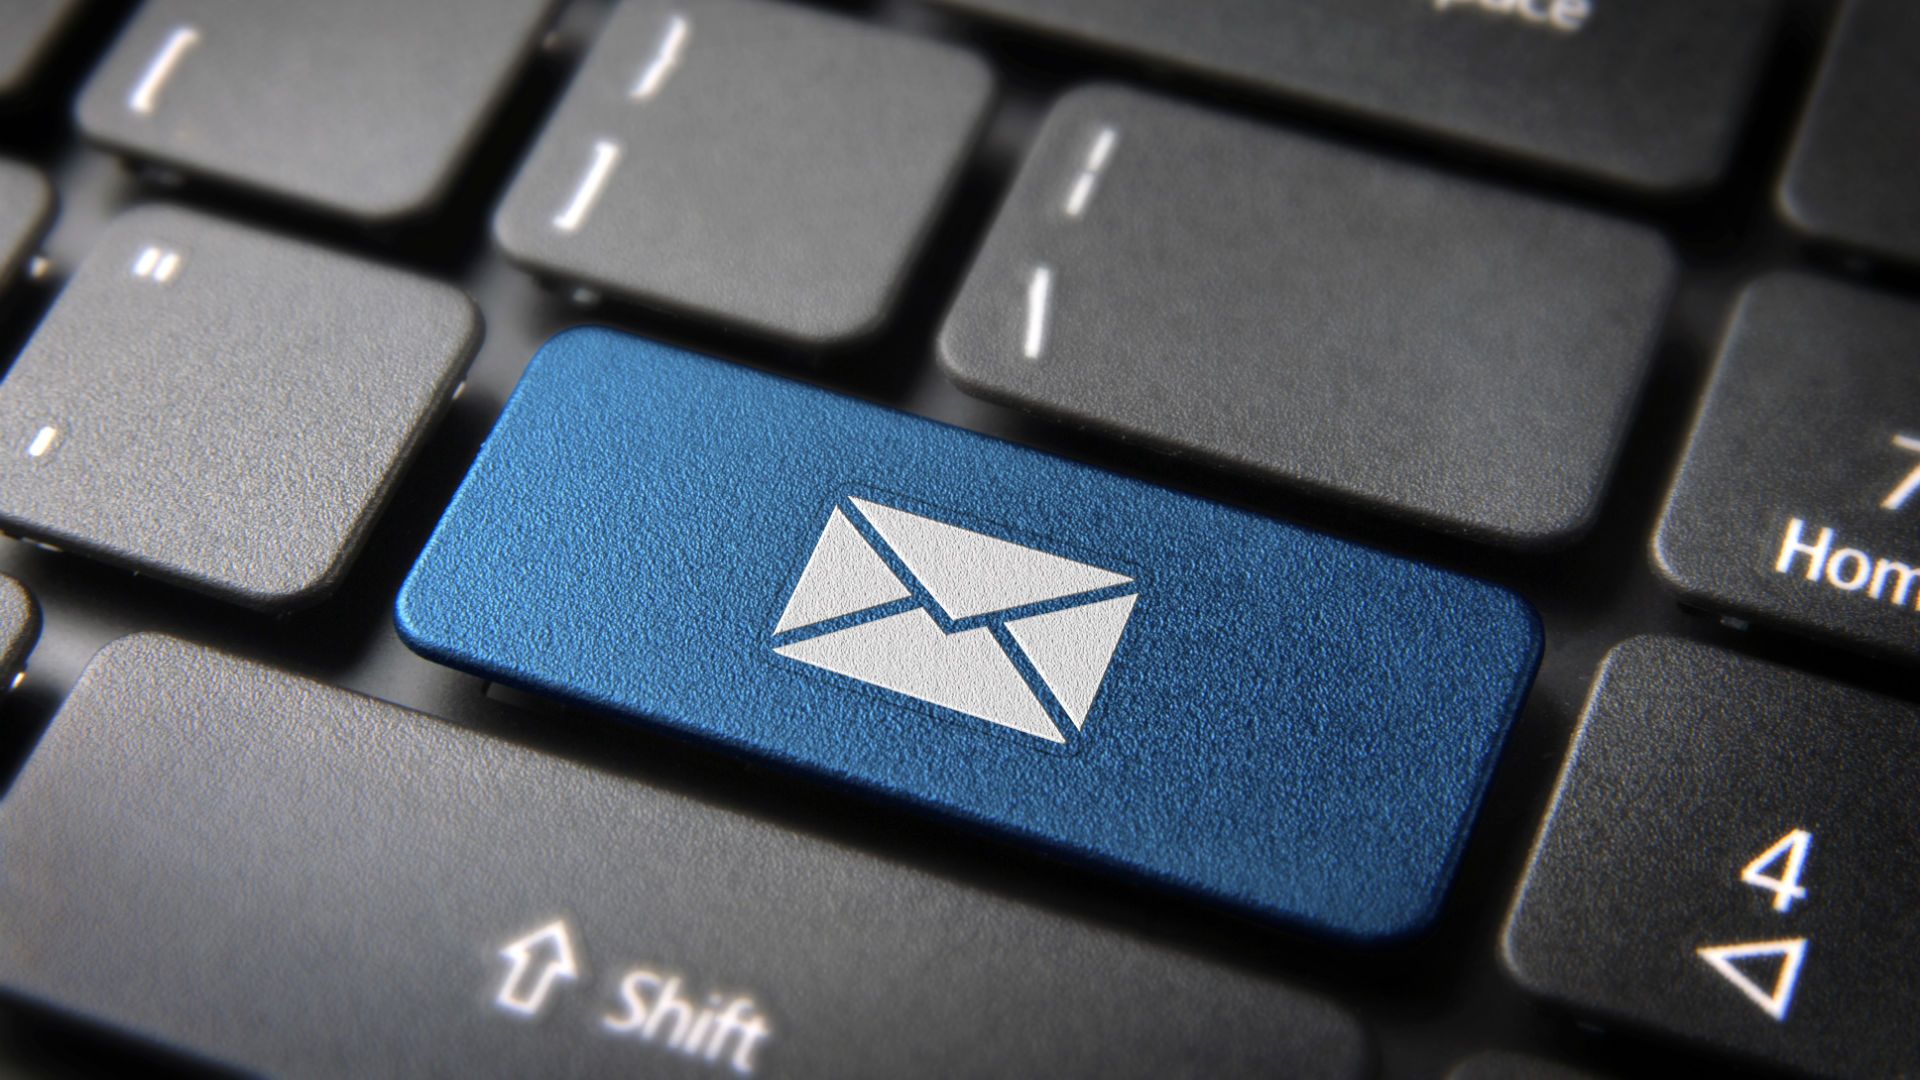 email marketing fundamentals to master